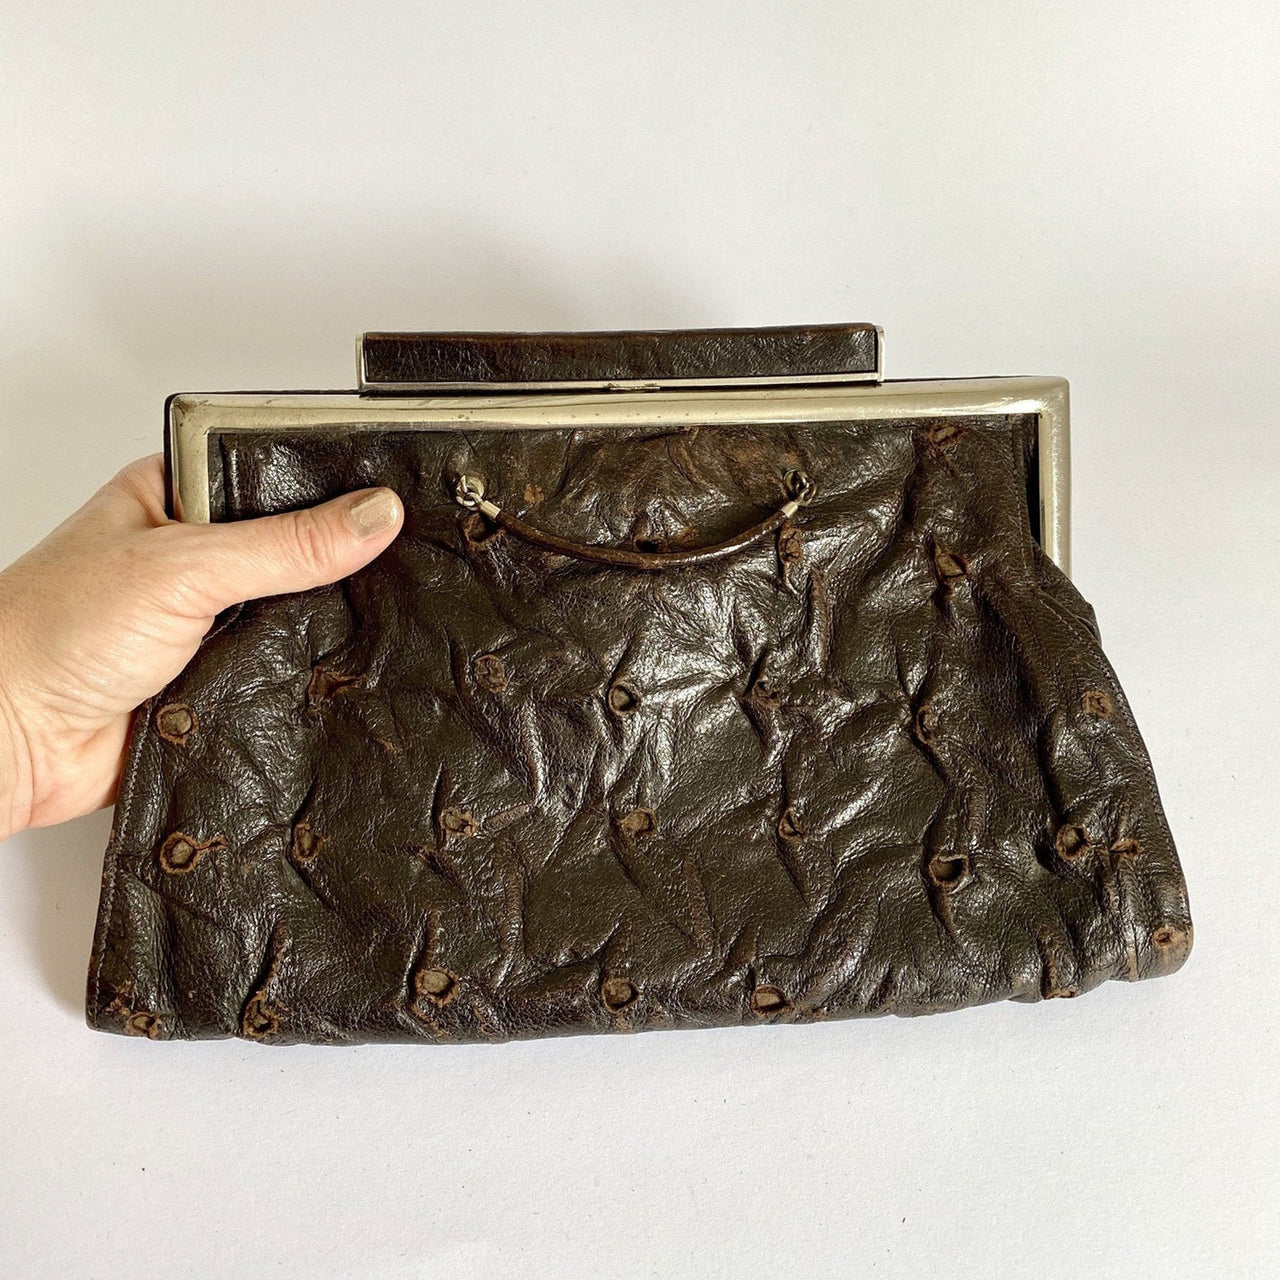 Vintage Handbags & Accessories For Sale